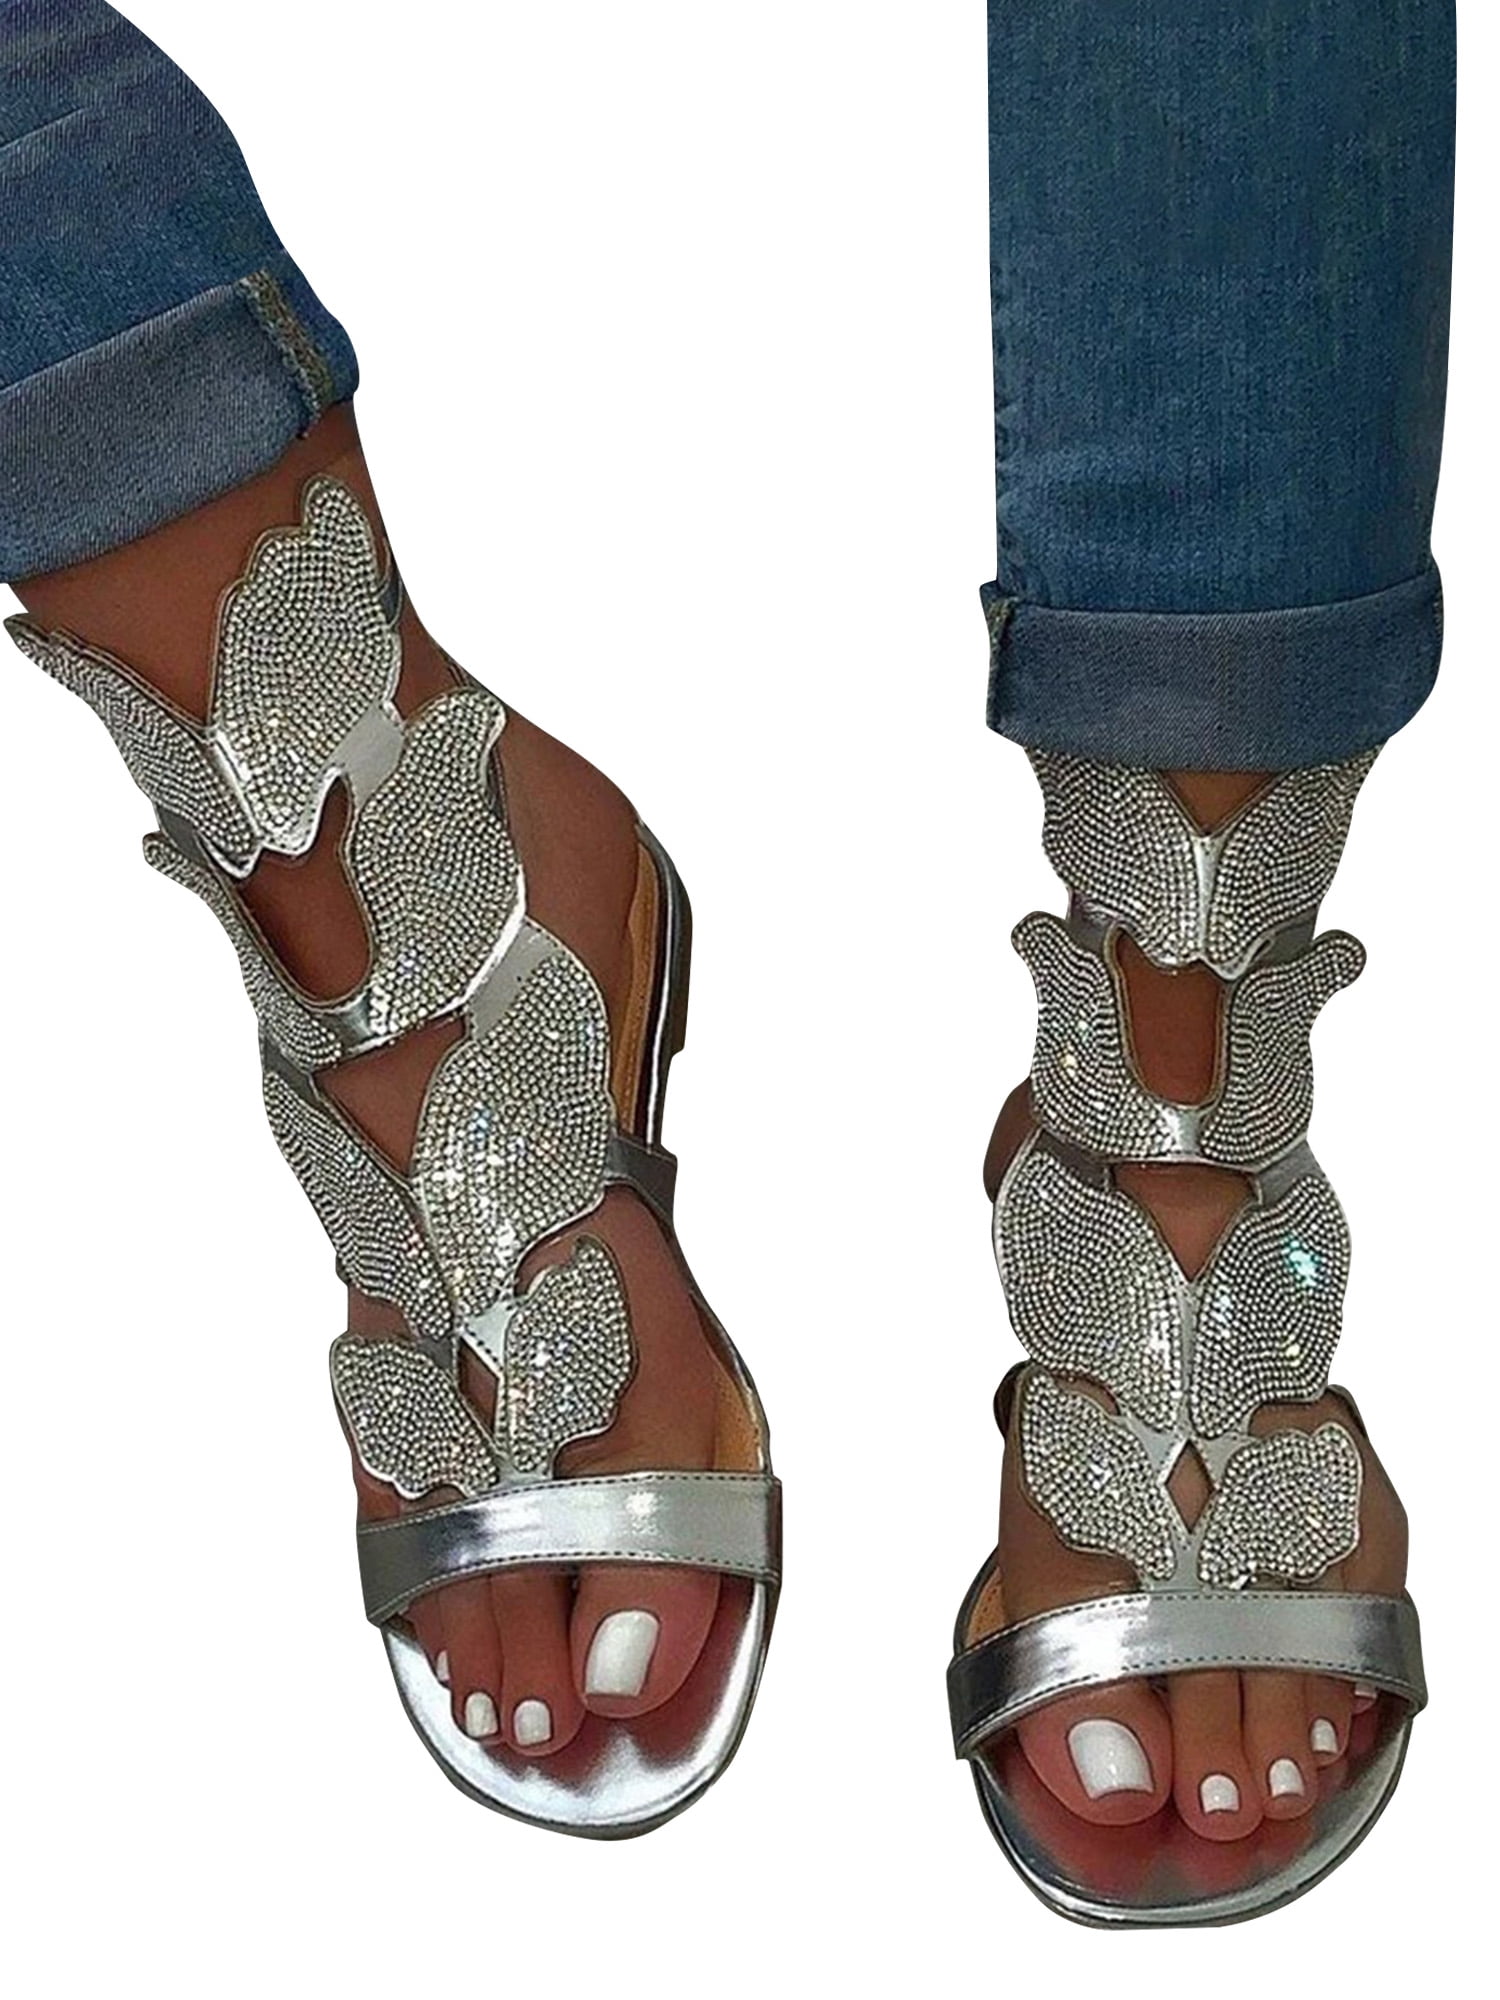 New Women Butterfly Rhinestone Sandals Flat Shoes Glitter Summer Gladiator Size 